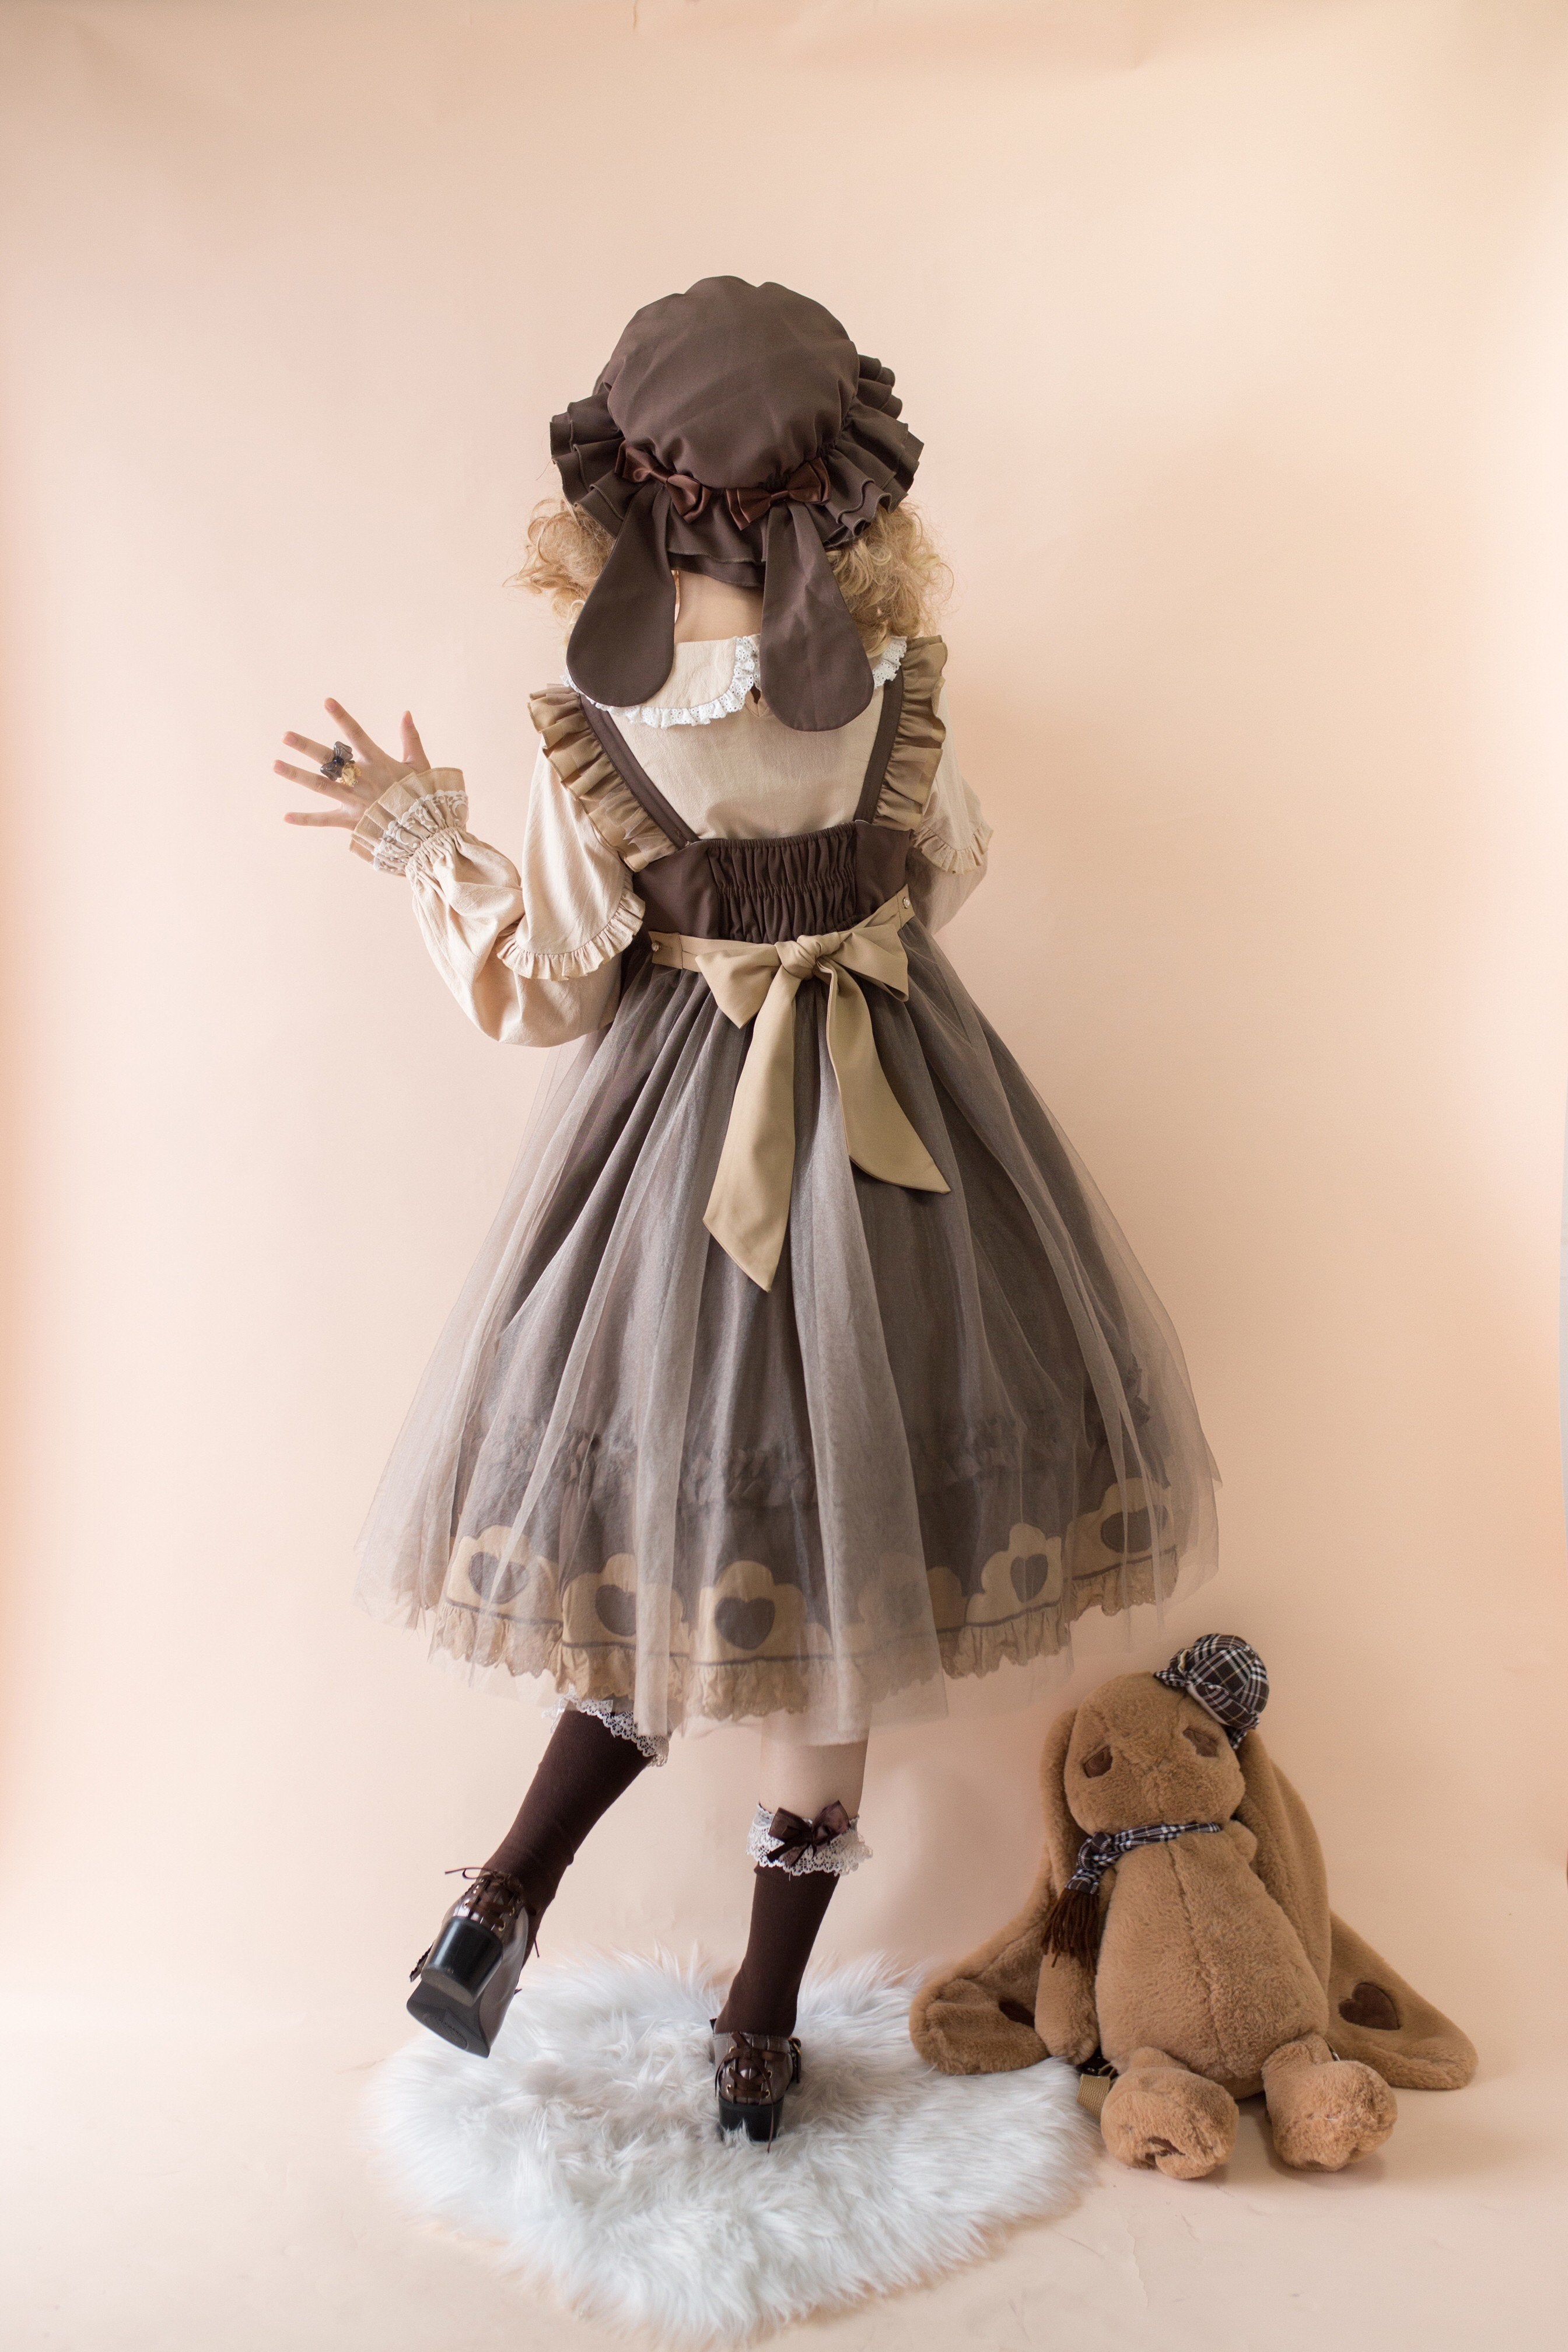 Japanese Sweet Lolita Cute Rabbit Ruffles Bow Jsk Princess Dress MK16741